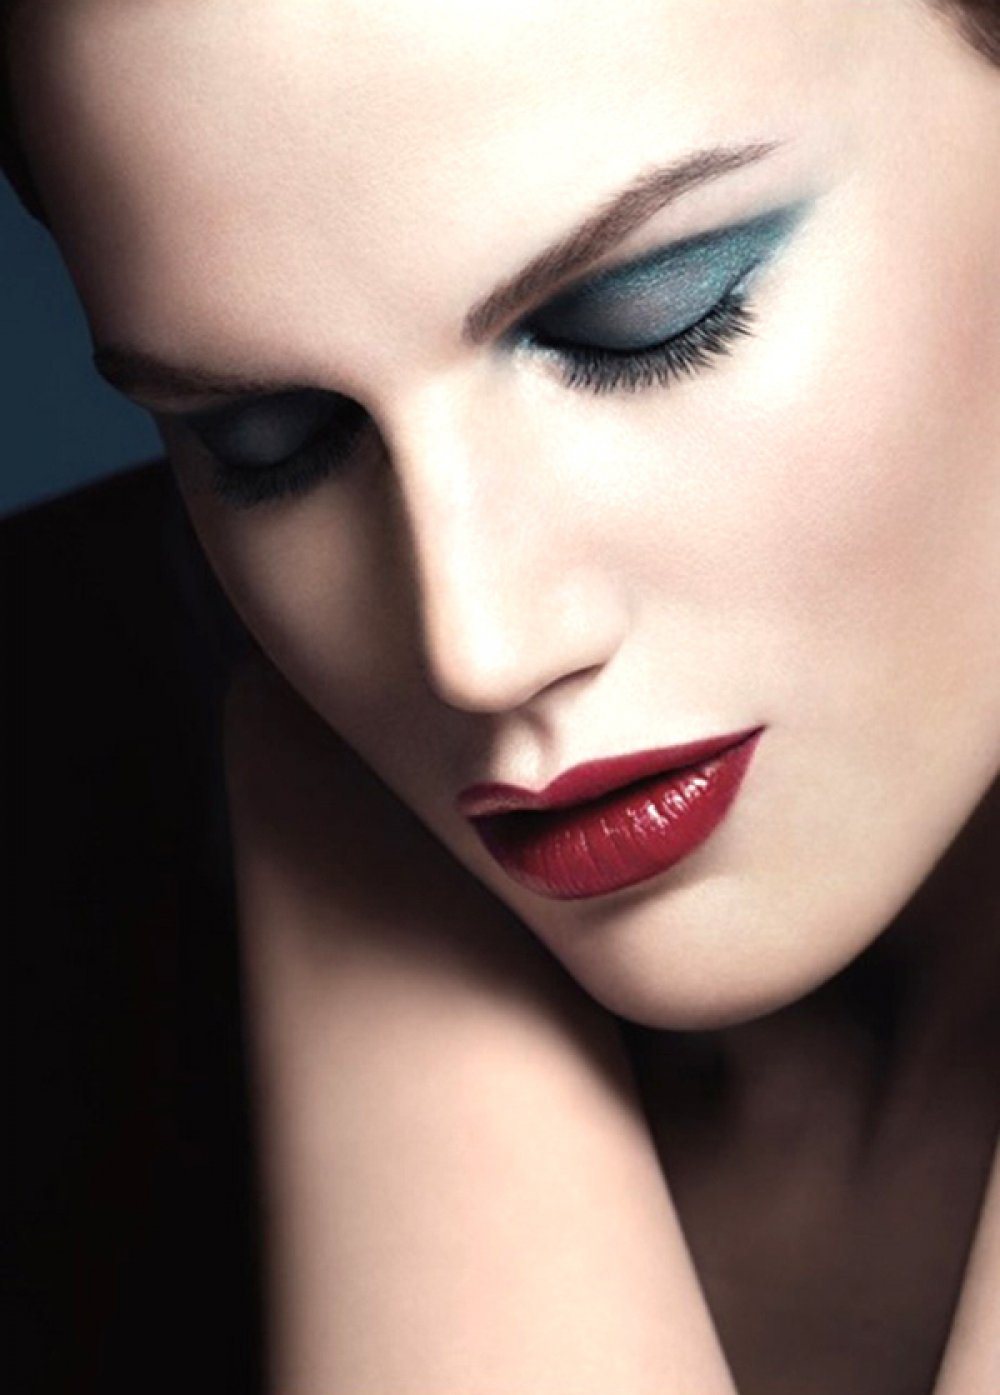 Giorgio armani представил осеннюю коллекцию макияжа kaleidoscope красота на elle.ru.